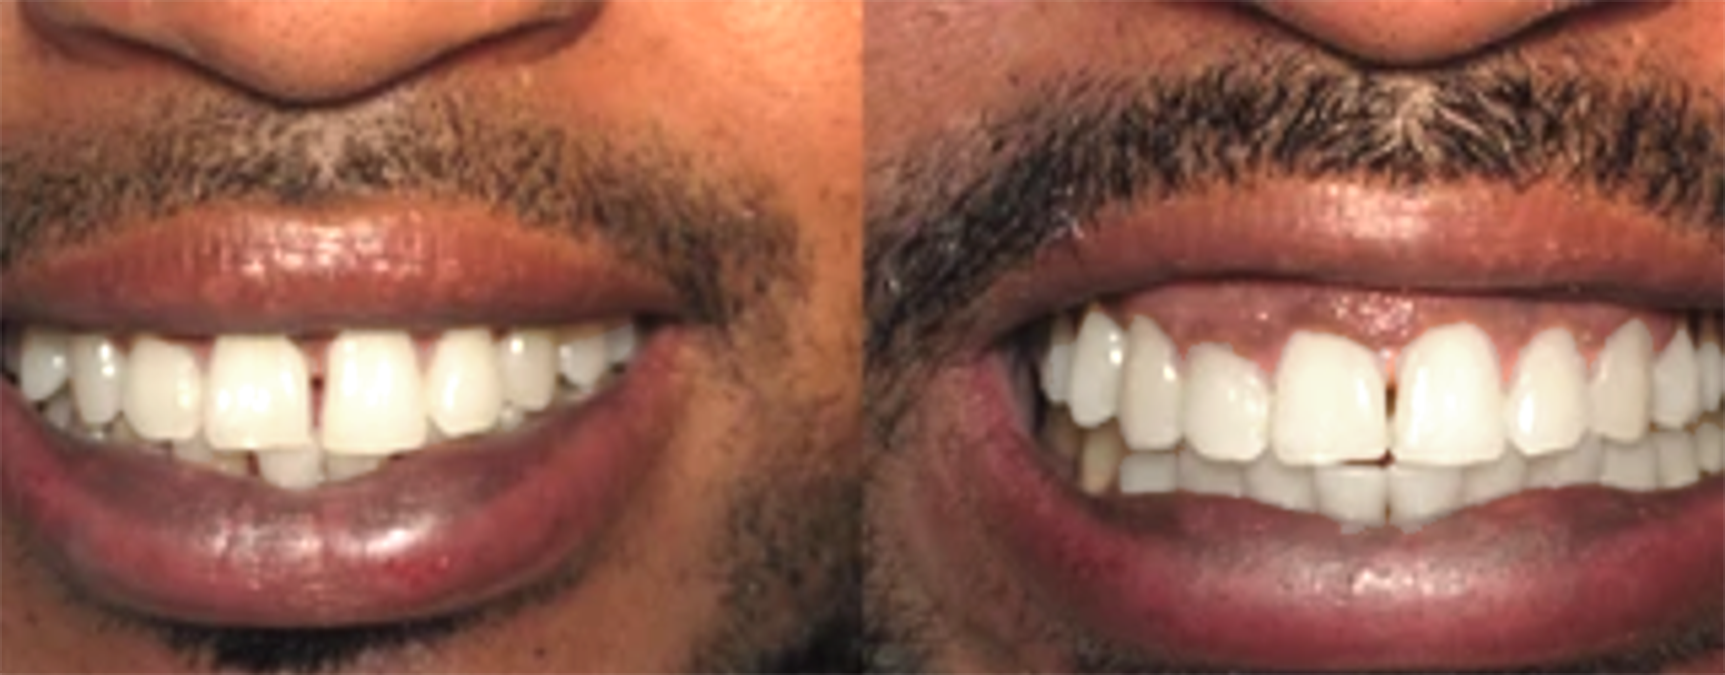 teeth spacing treatment